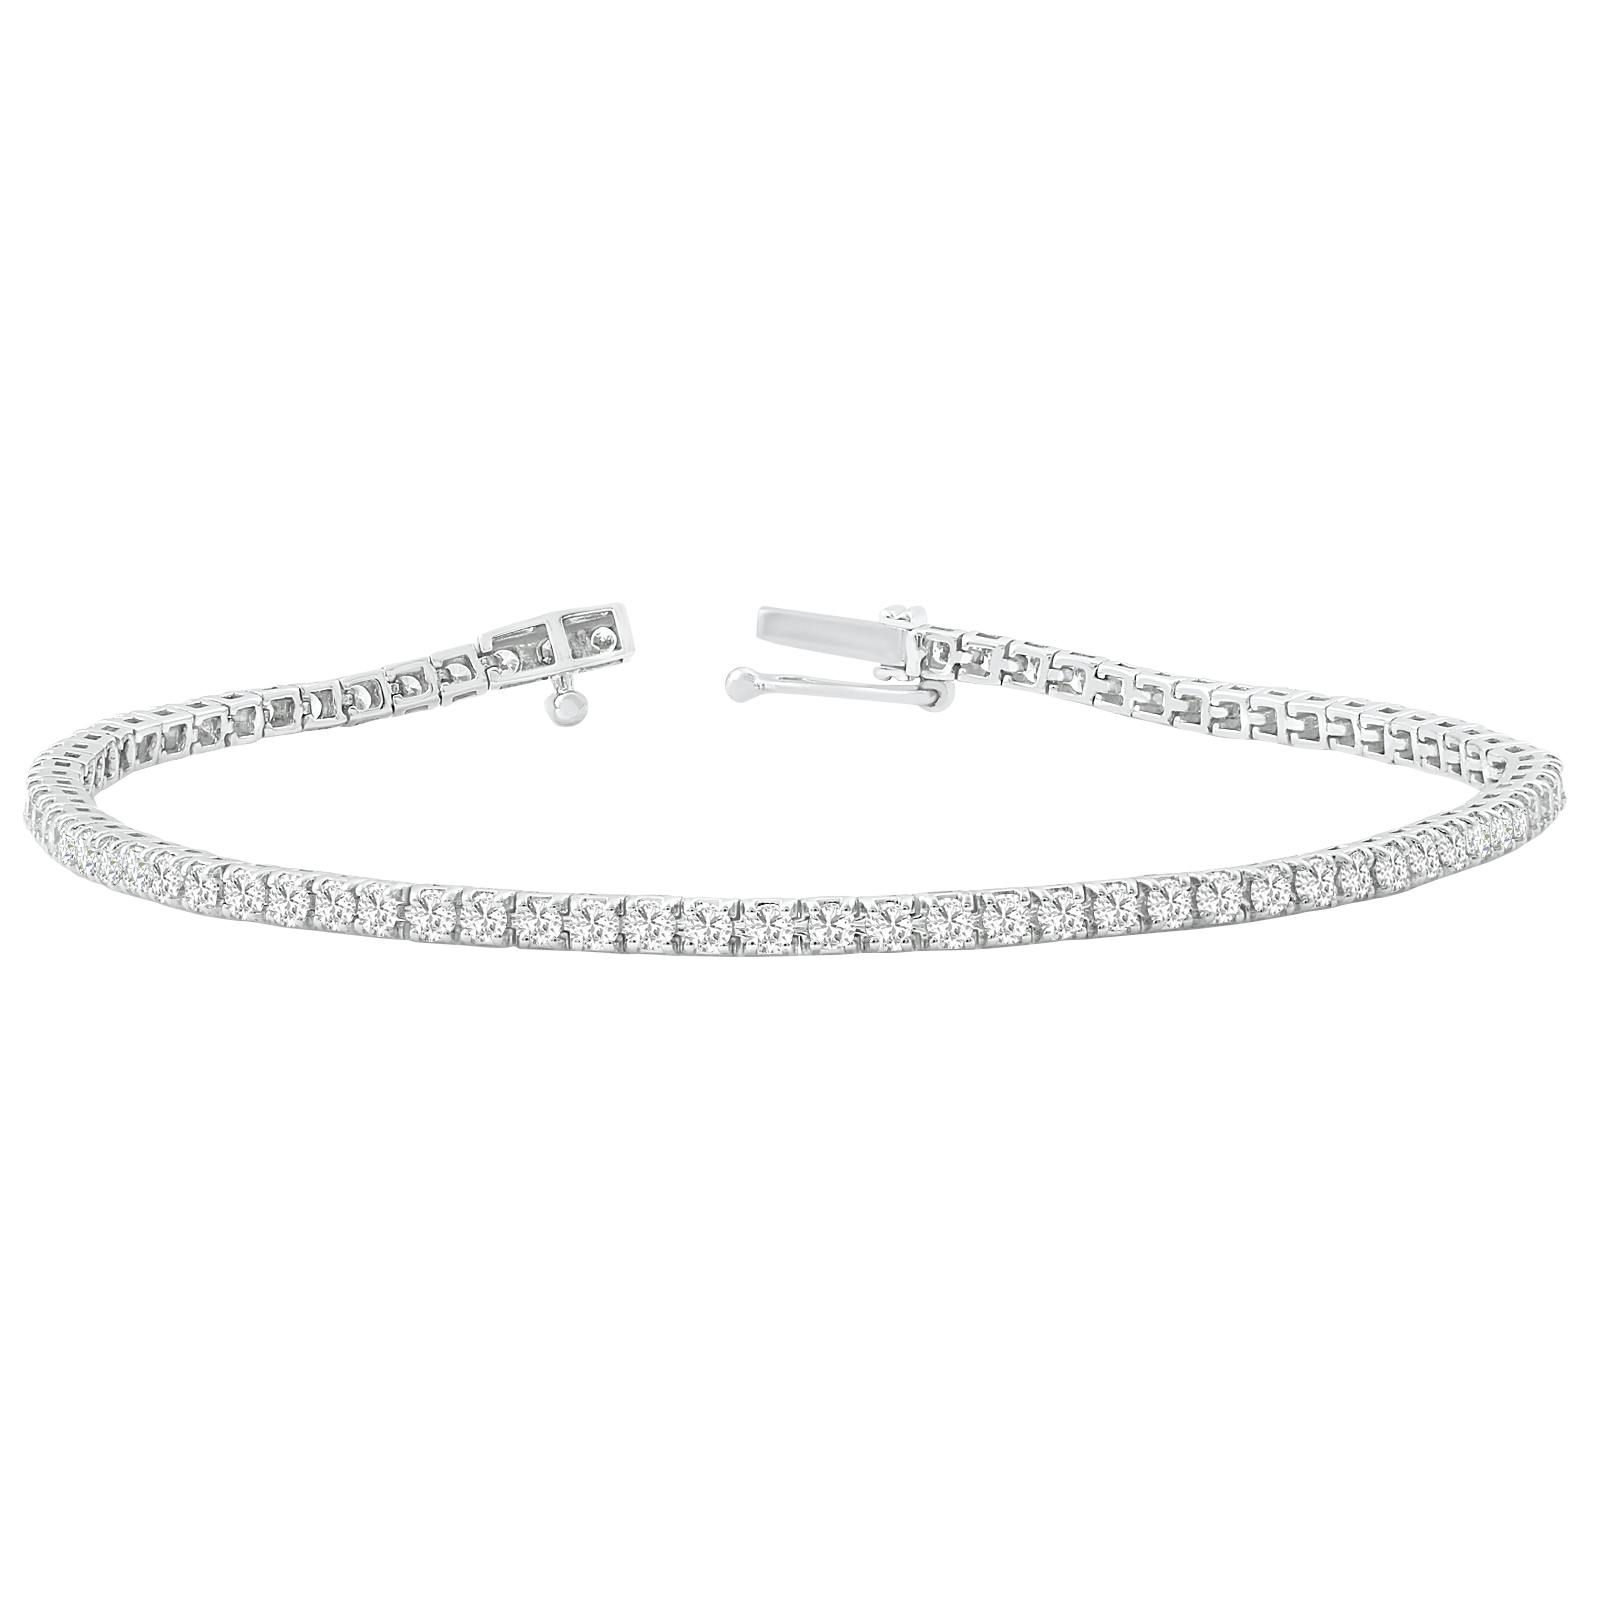 2.0ct Tennis bracelet - Claw set, 7” length